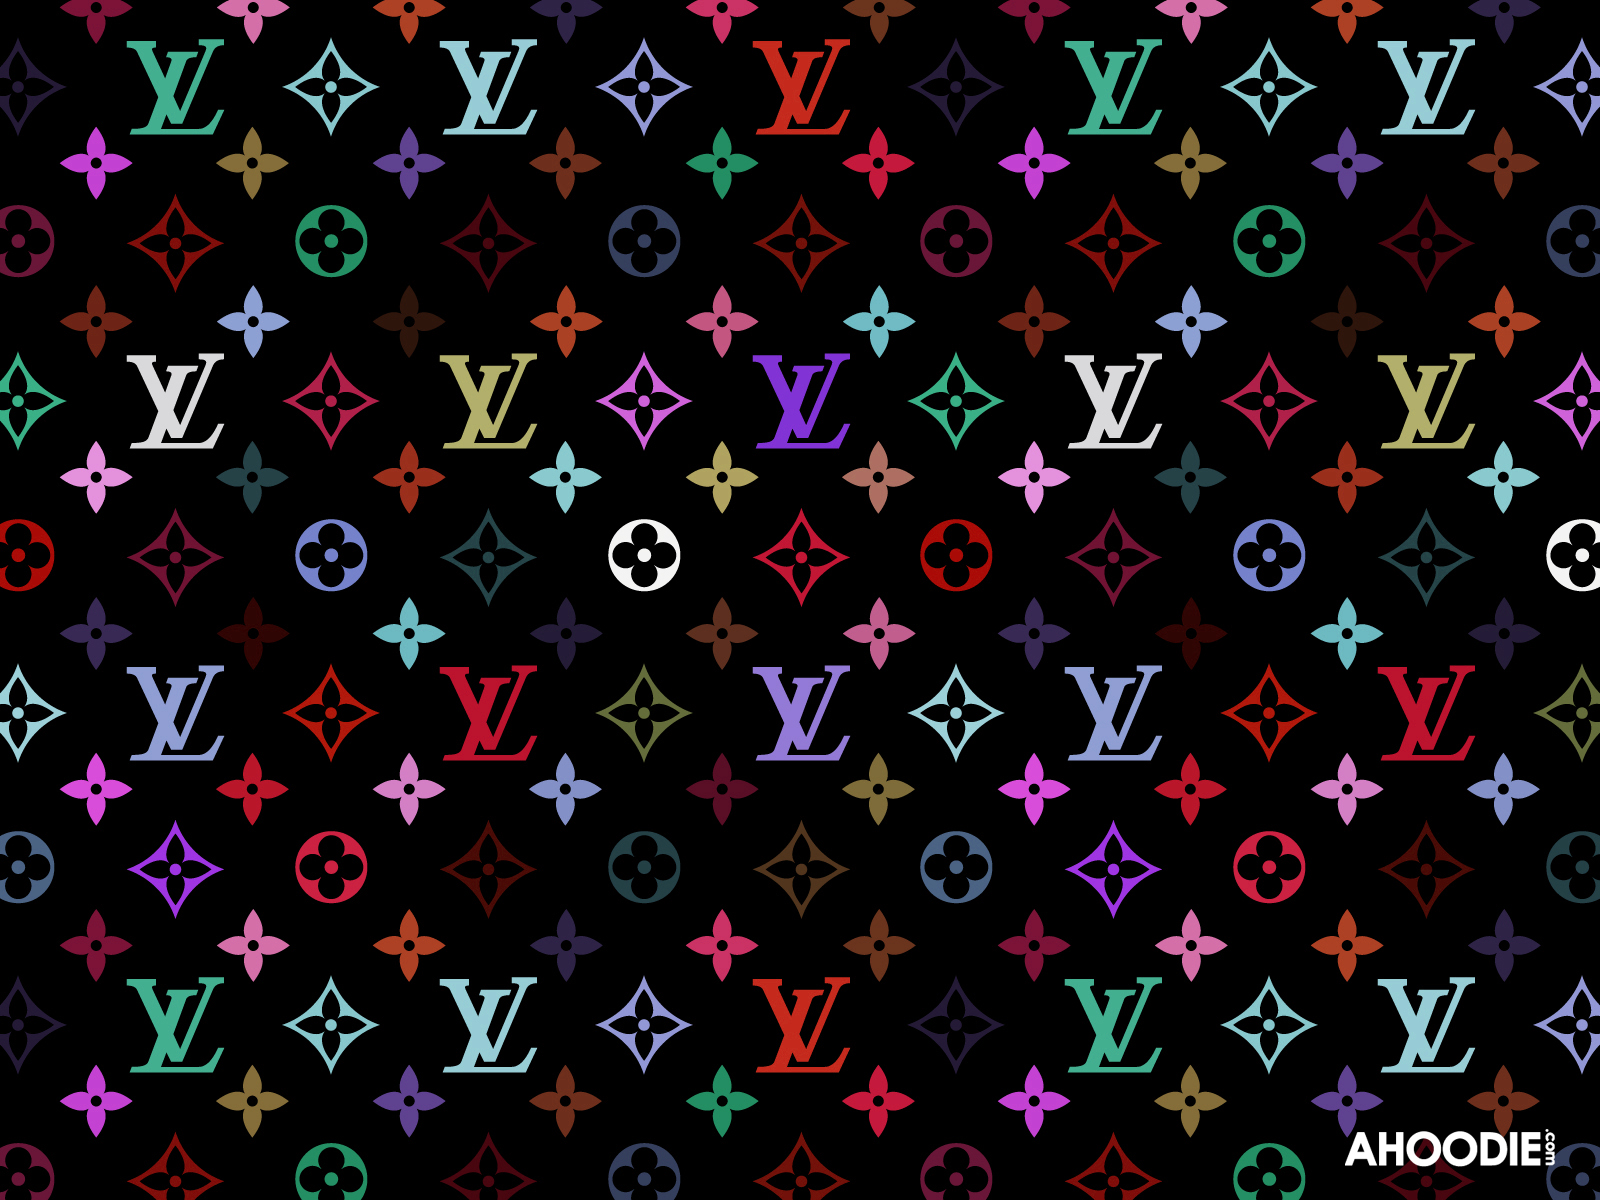 Louis Vuitton Wallpaper HD